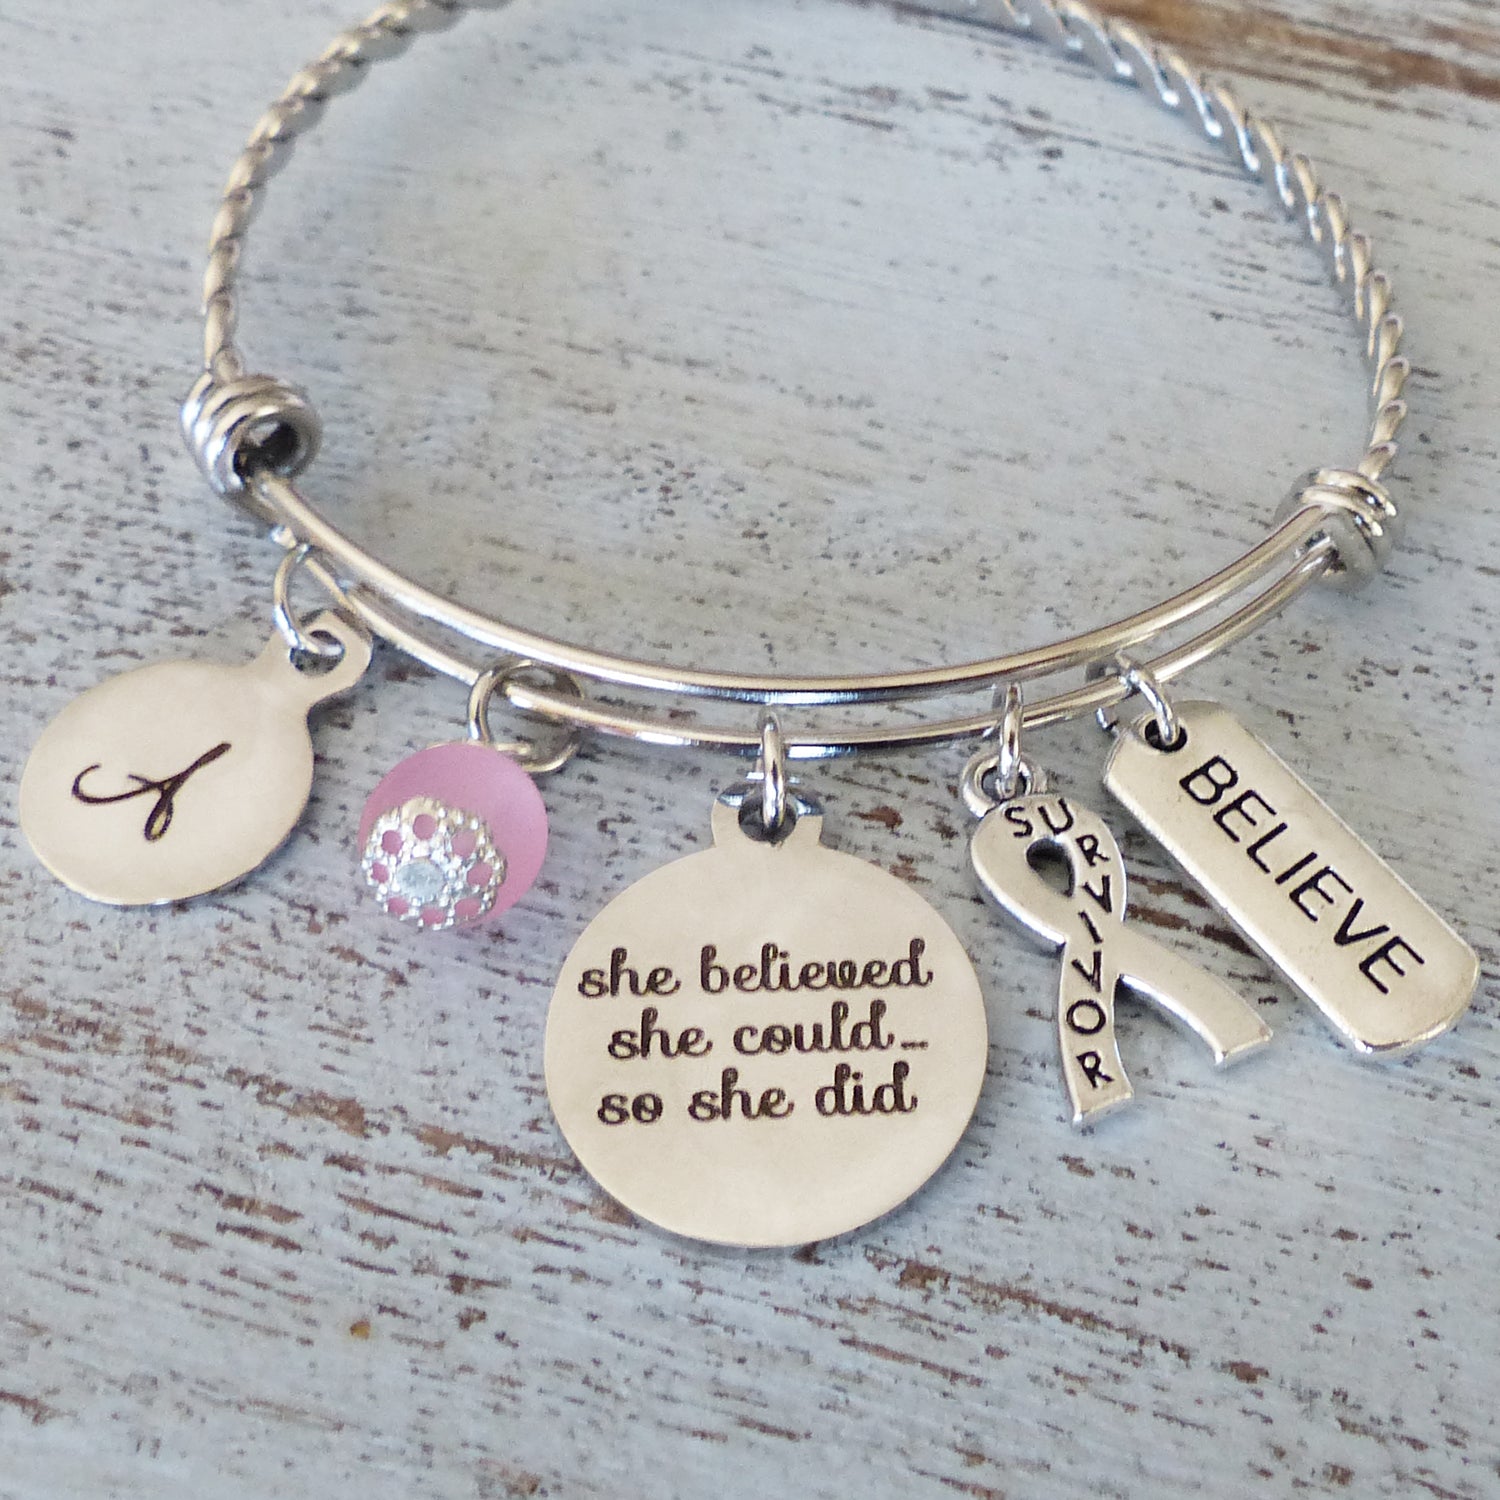 Cancer Survivor Gifts, Awareness, Survivor Ribbon, She Believed She Could So She Did, Encouragement